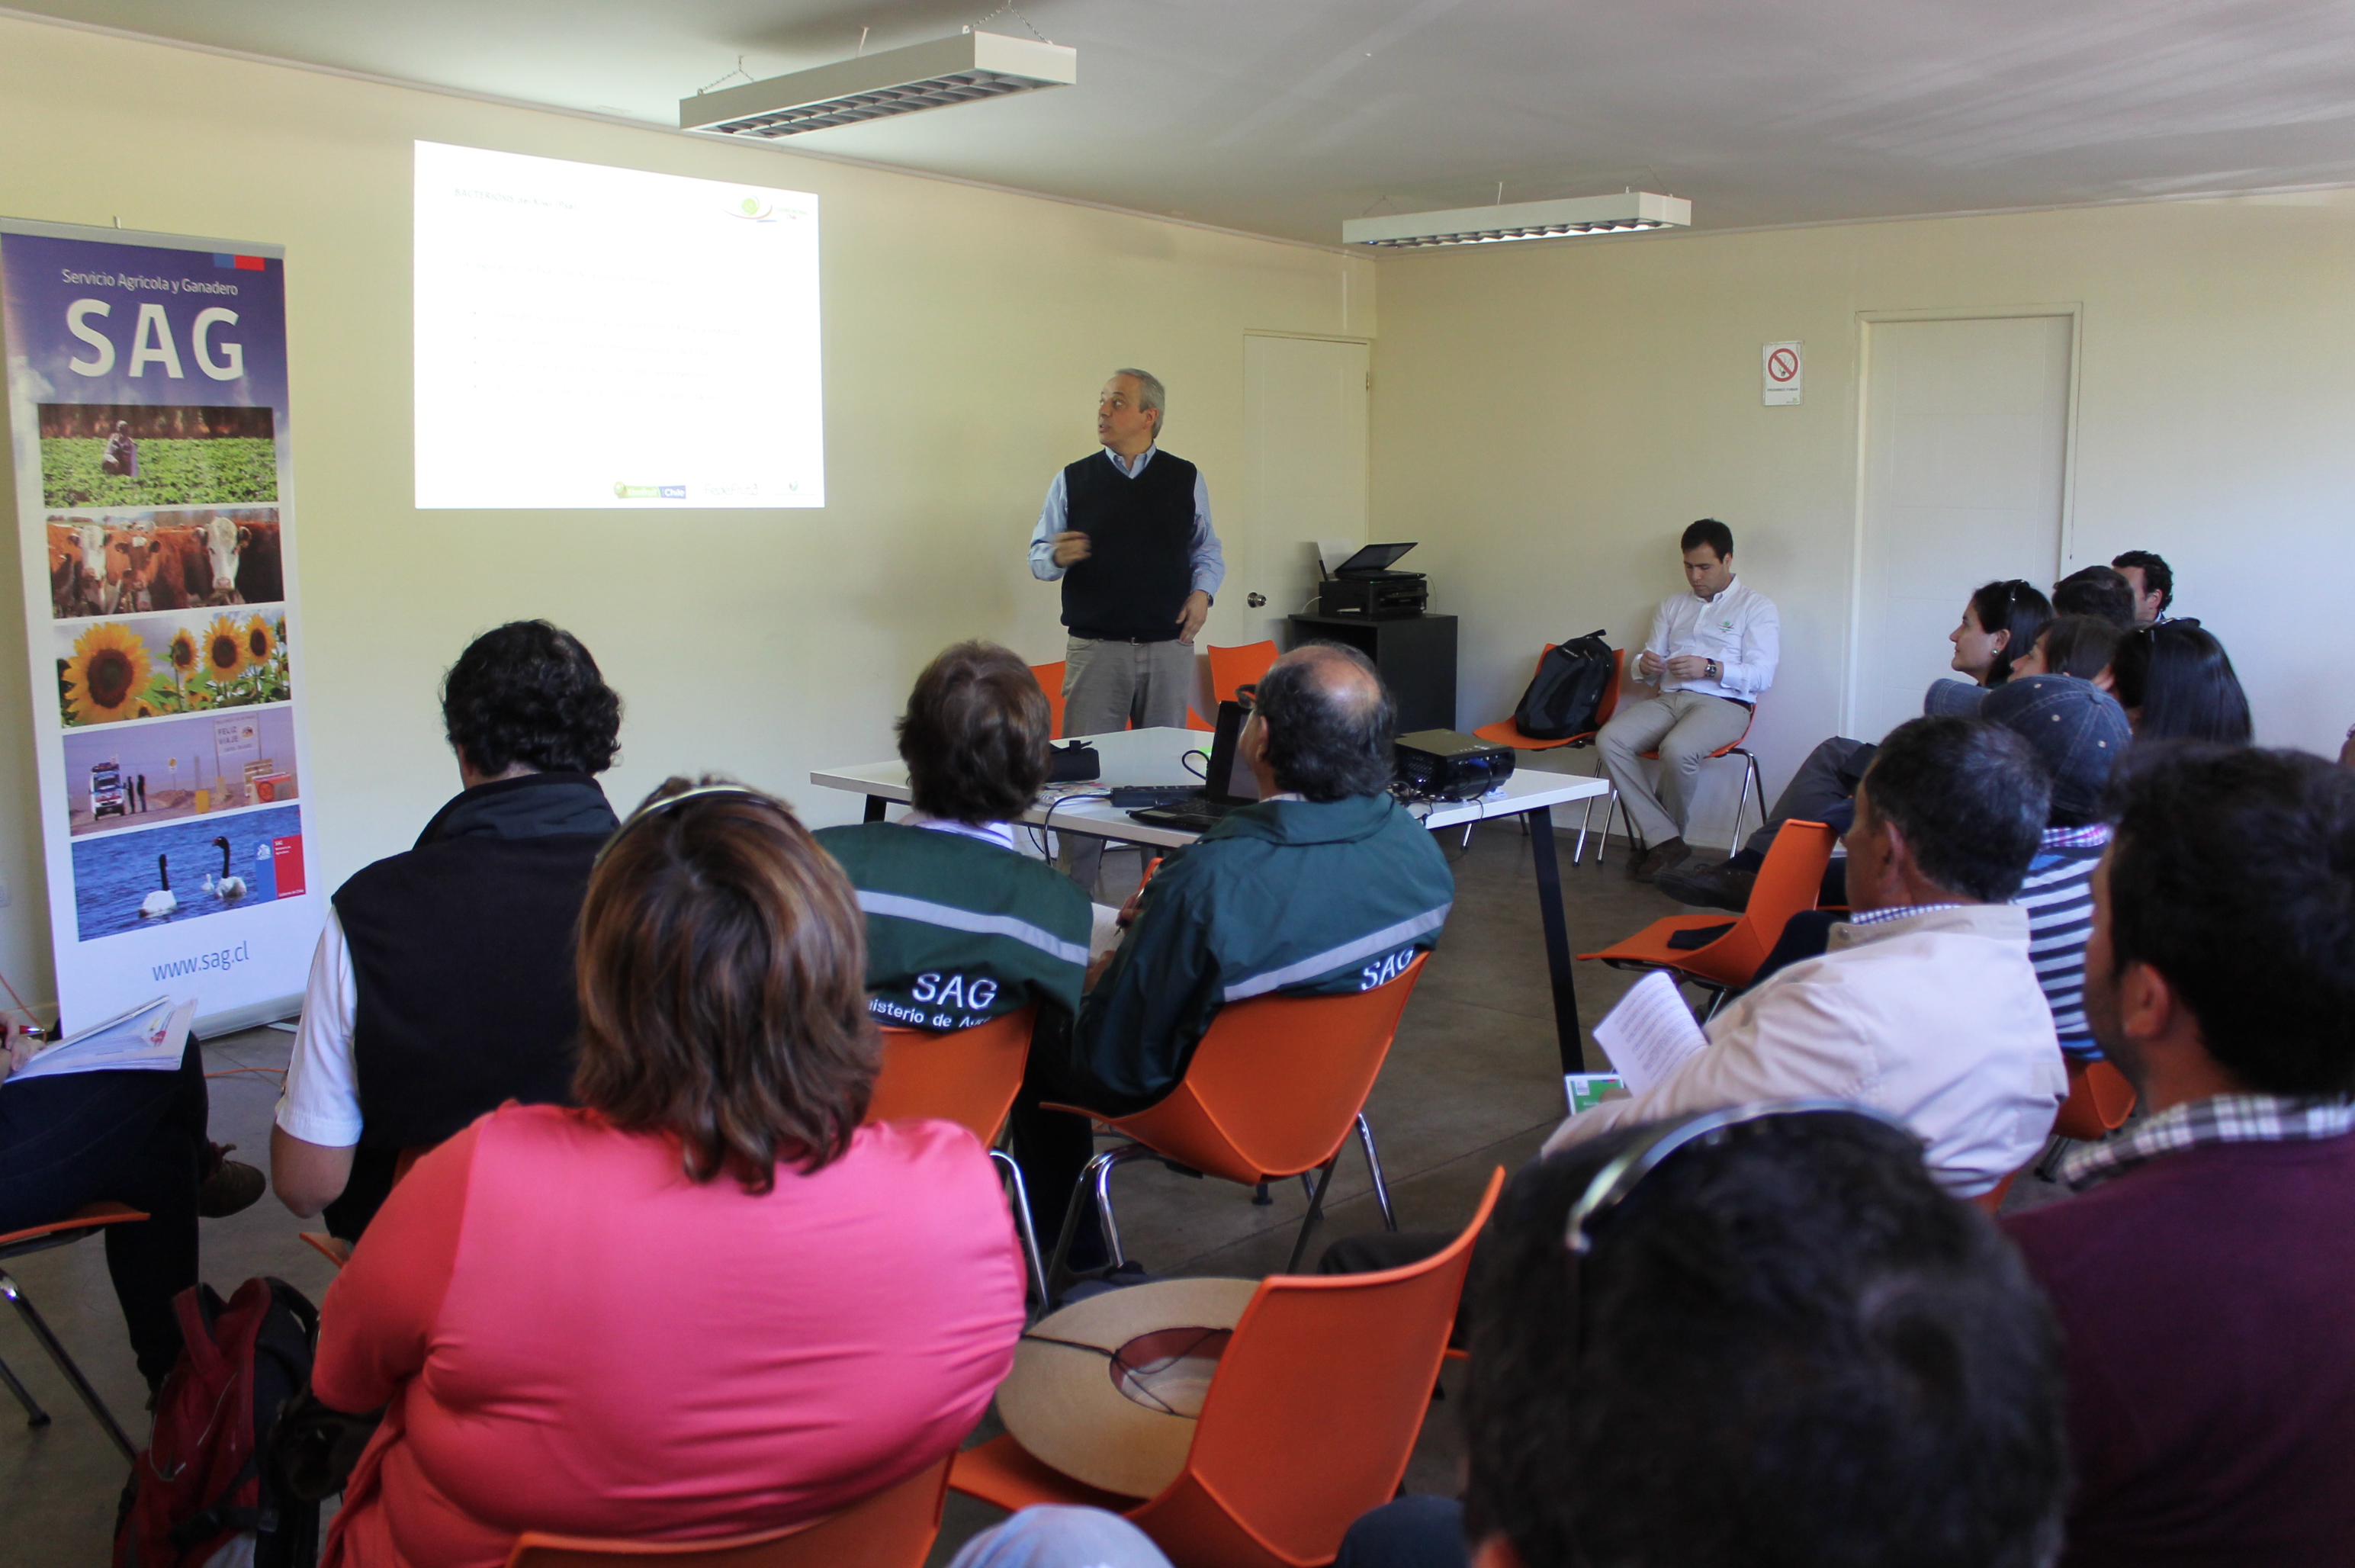 Comité del Kiwi y SAG del Maule, reúnen a productores para informar acerca de la PSA